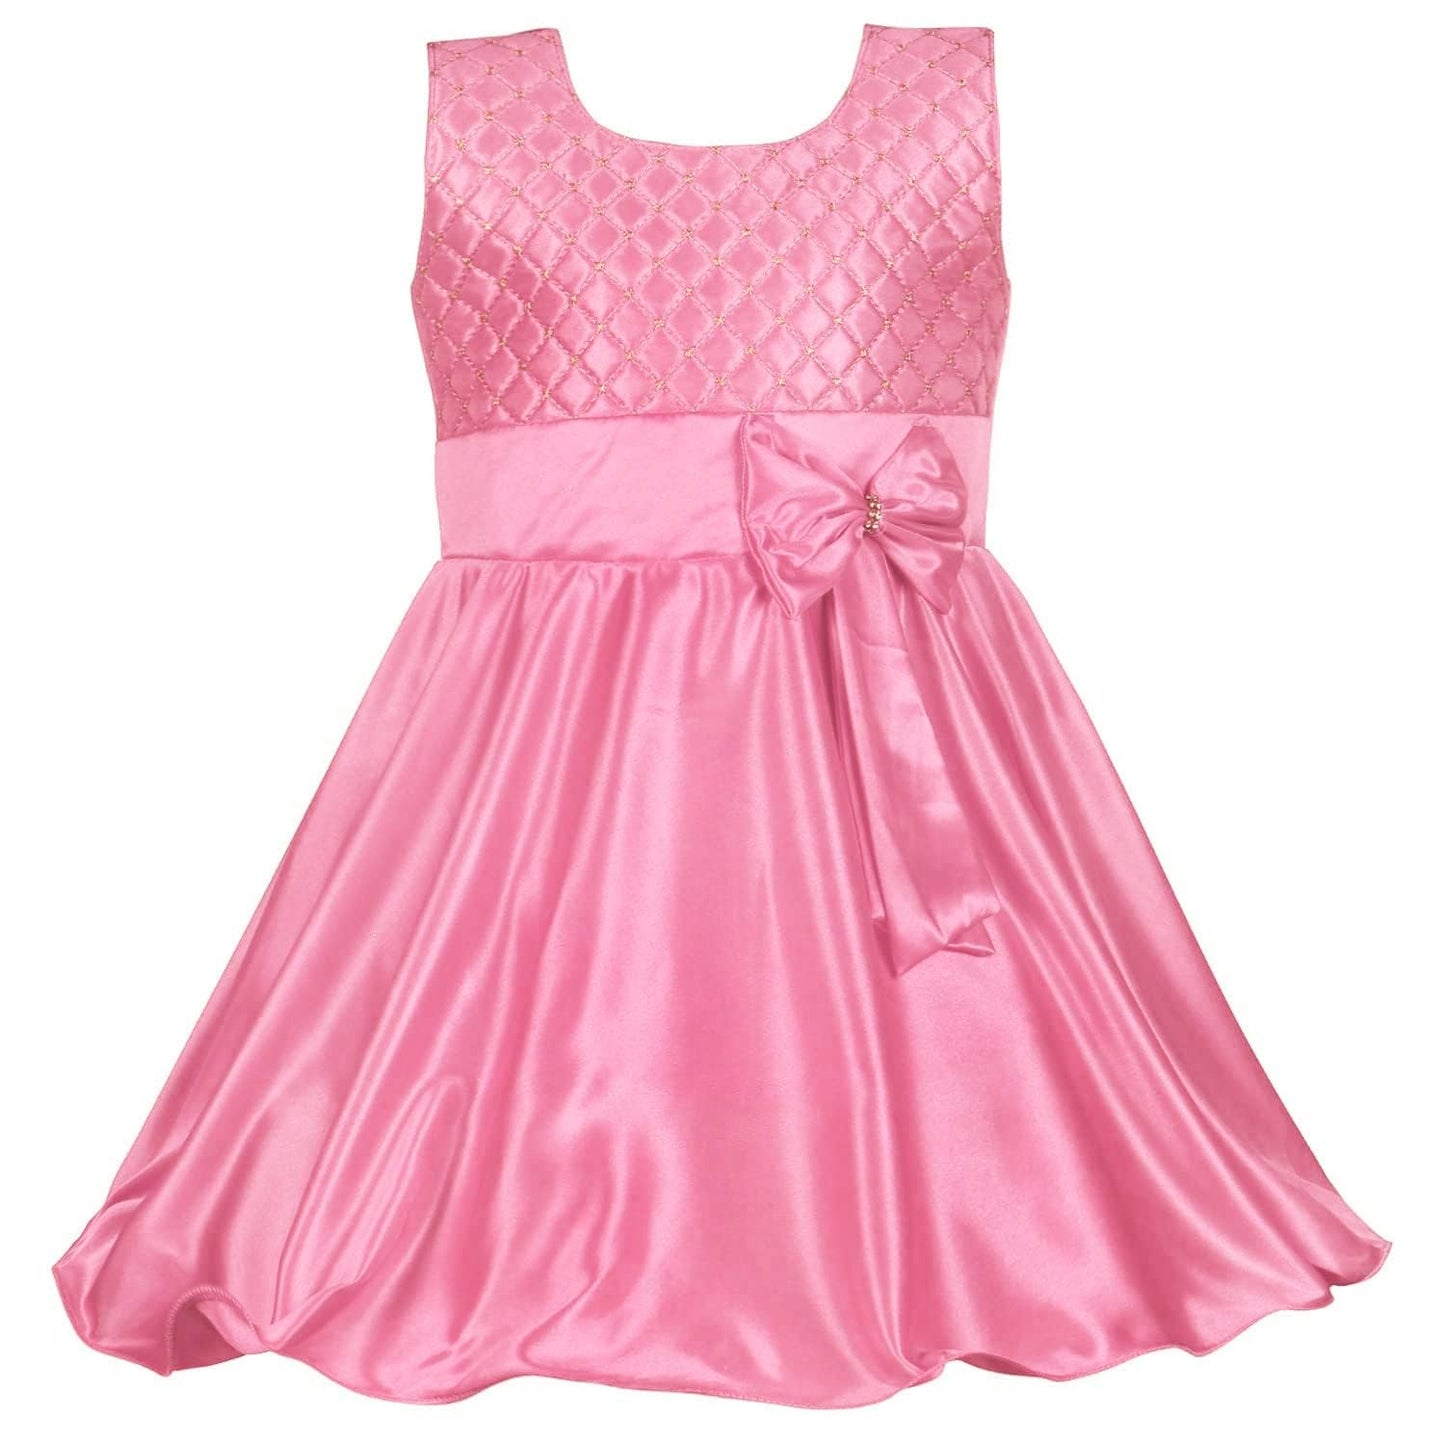 Wish Karo baby girls partywear frocks dress for girls fe3037bpkJKTMLTF